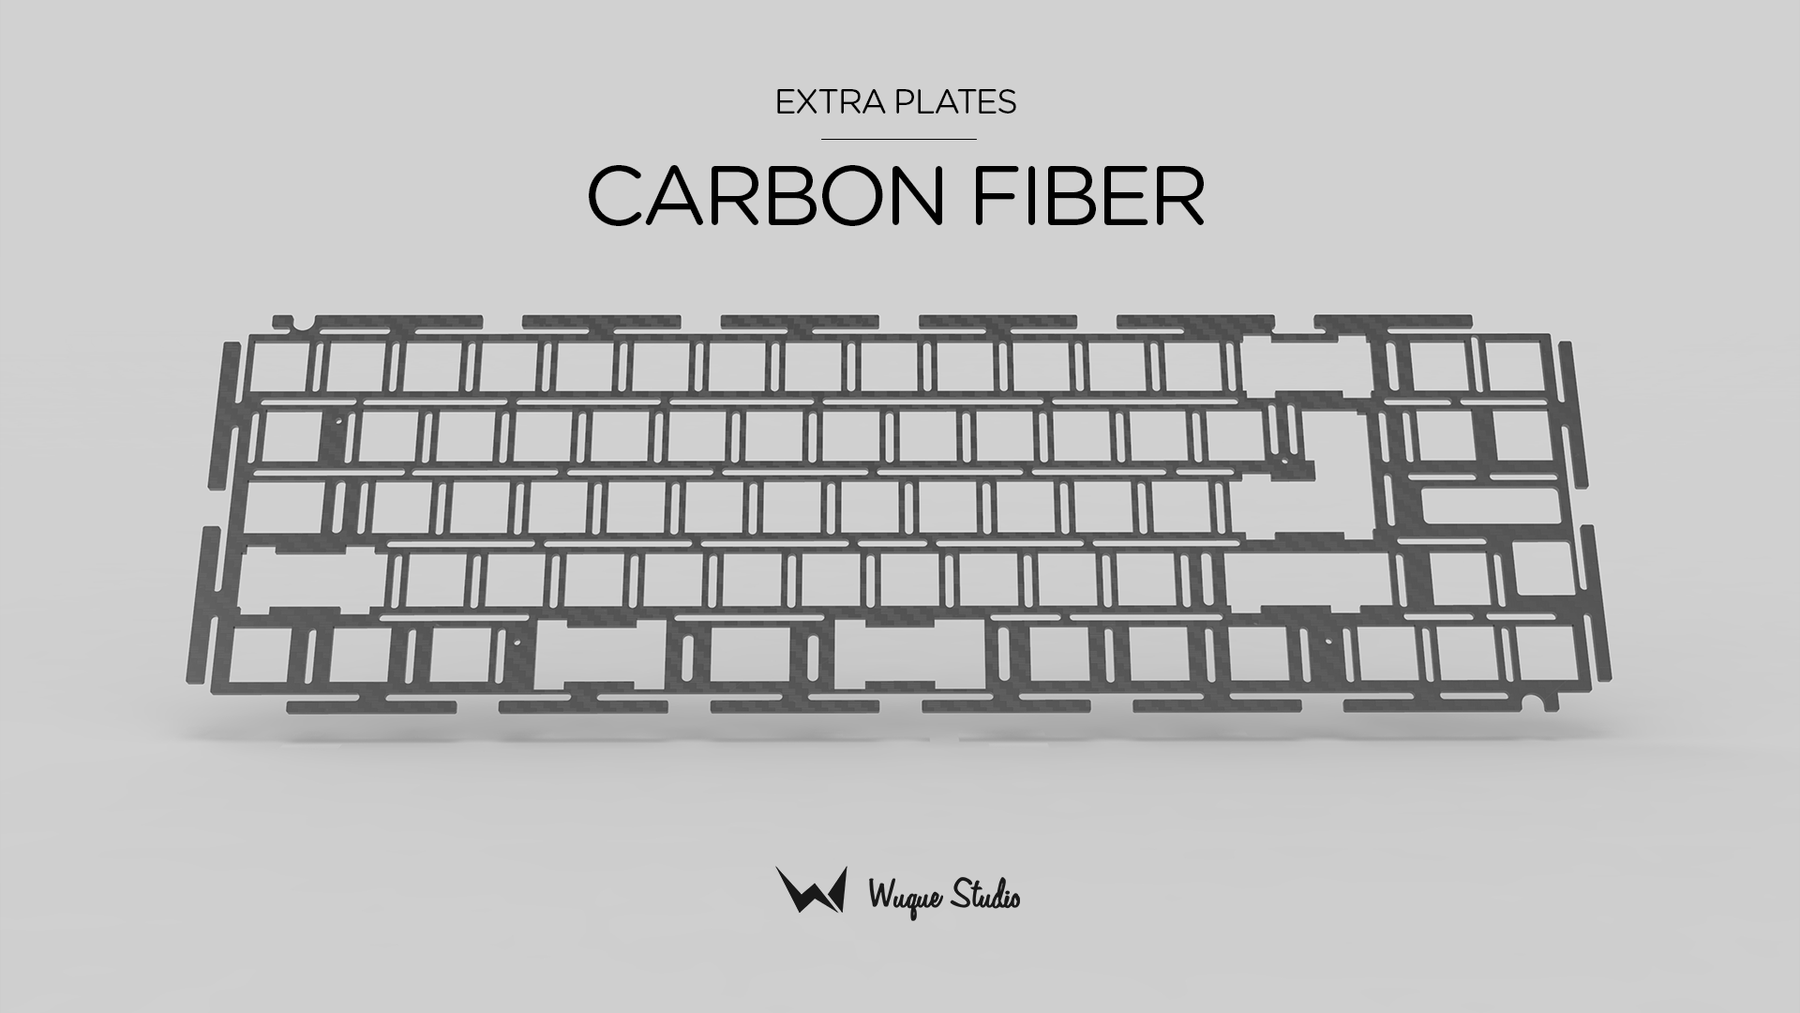 Aurora R2 Keyboard Kit - Extras